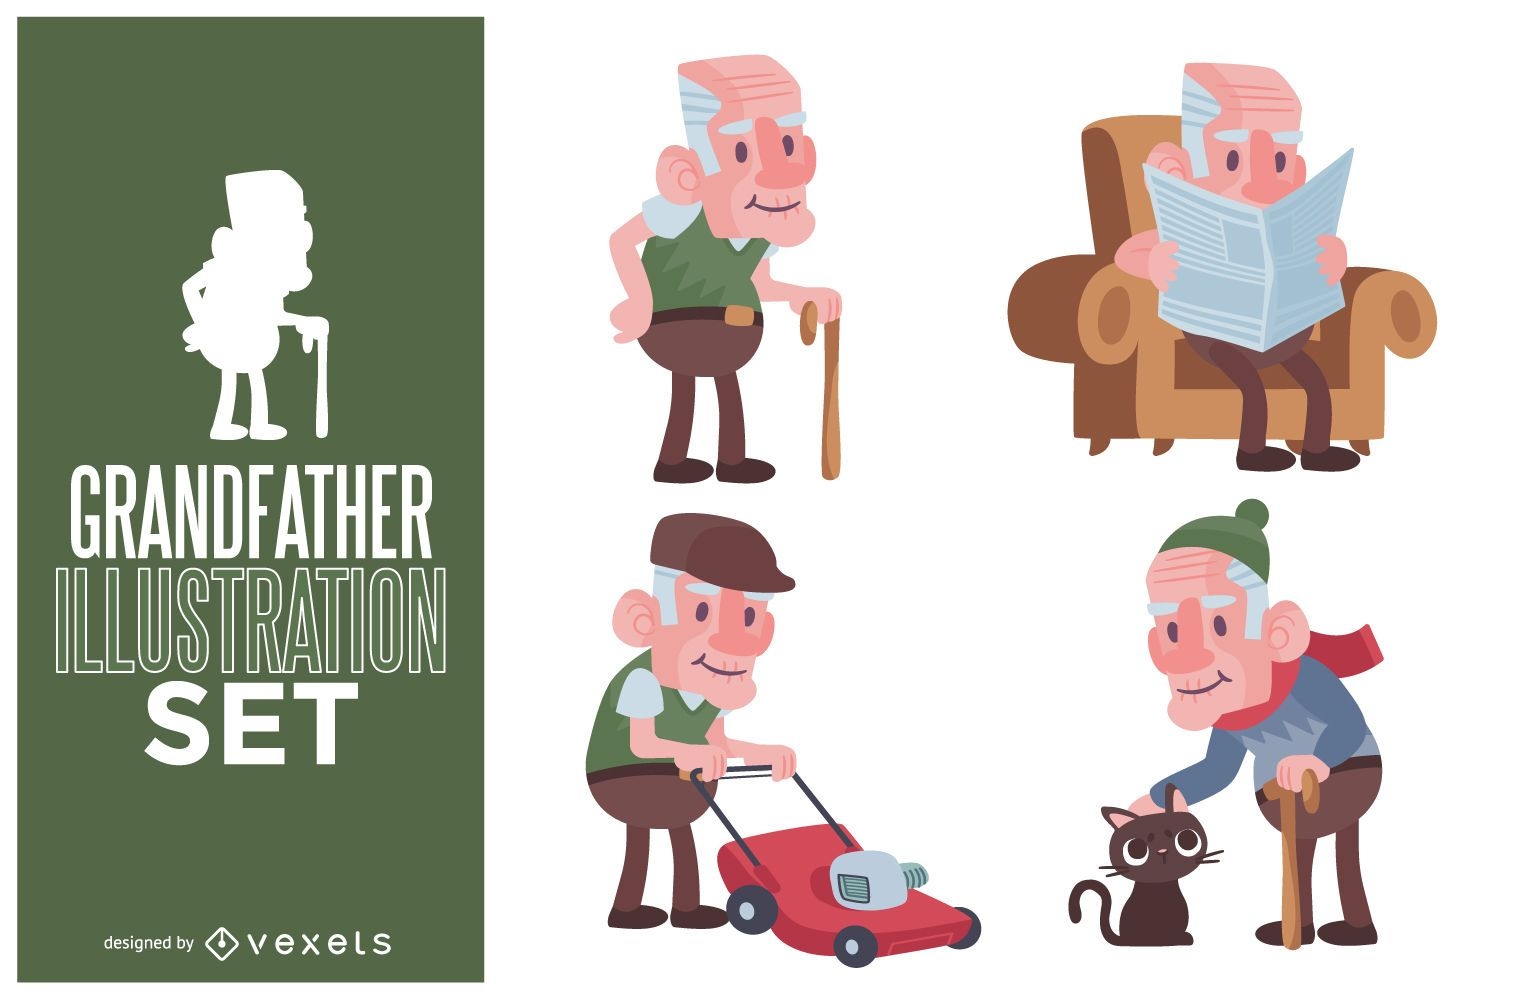 Grandfather illustration set